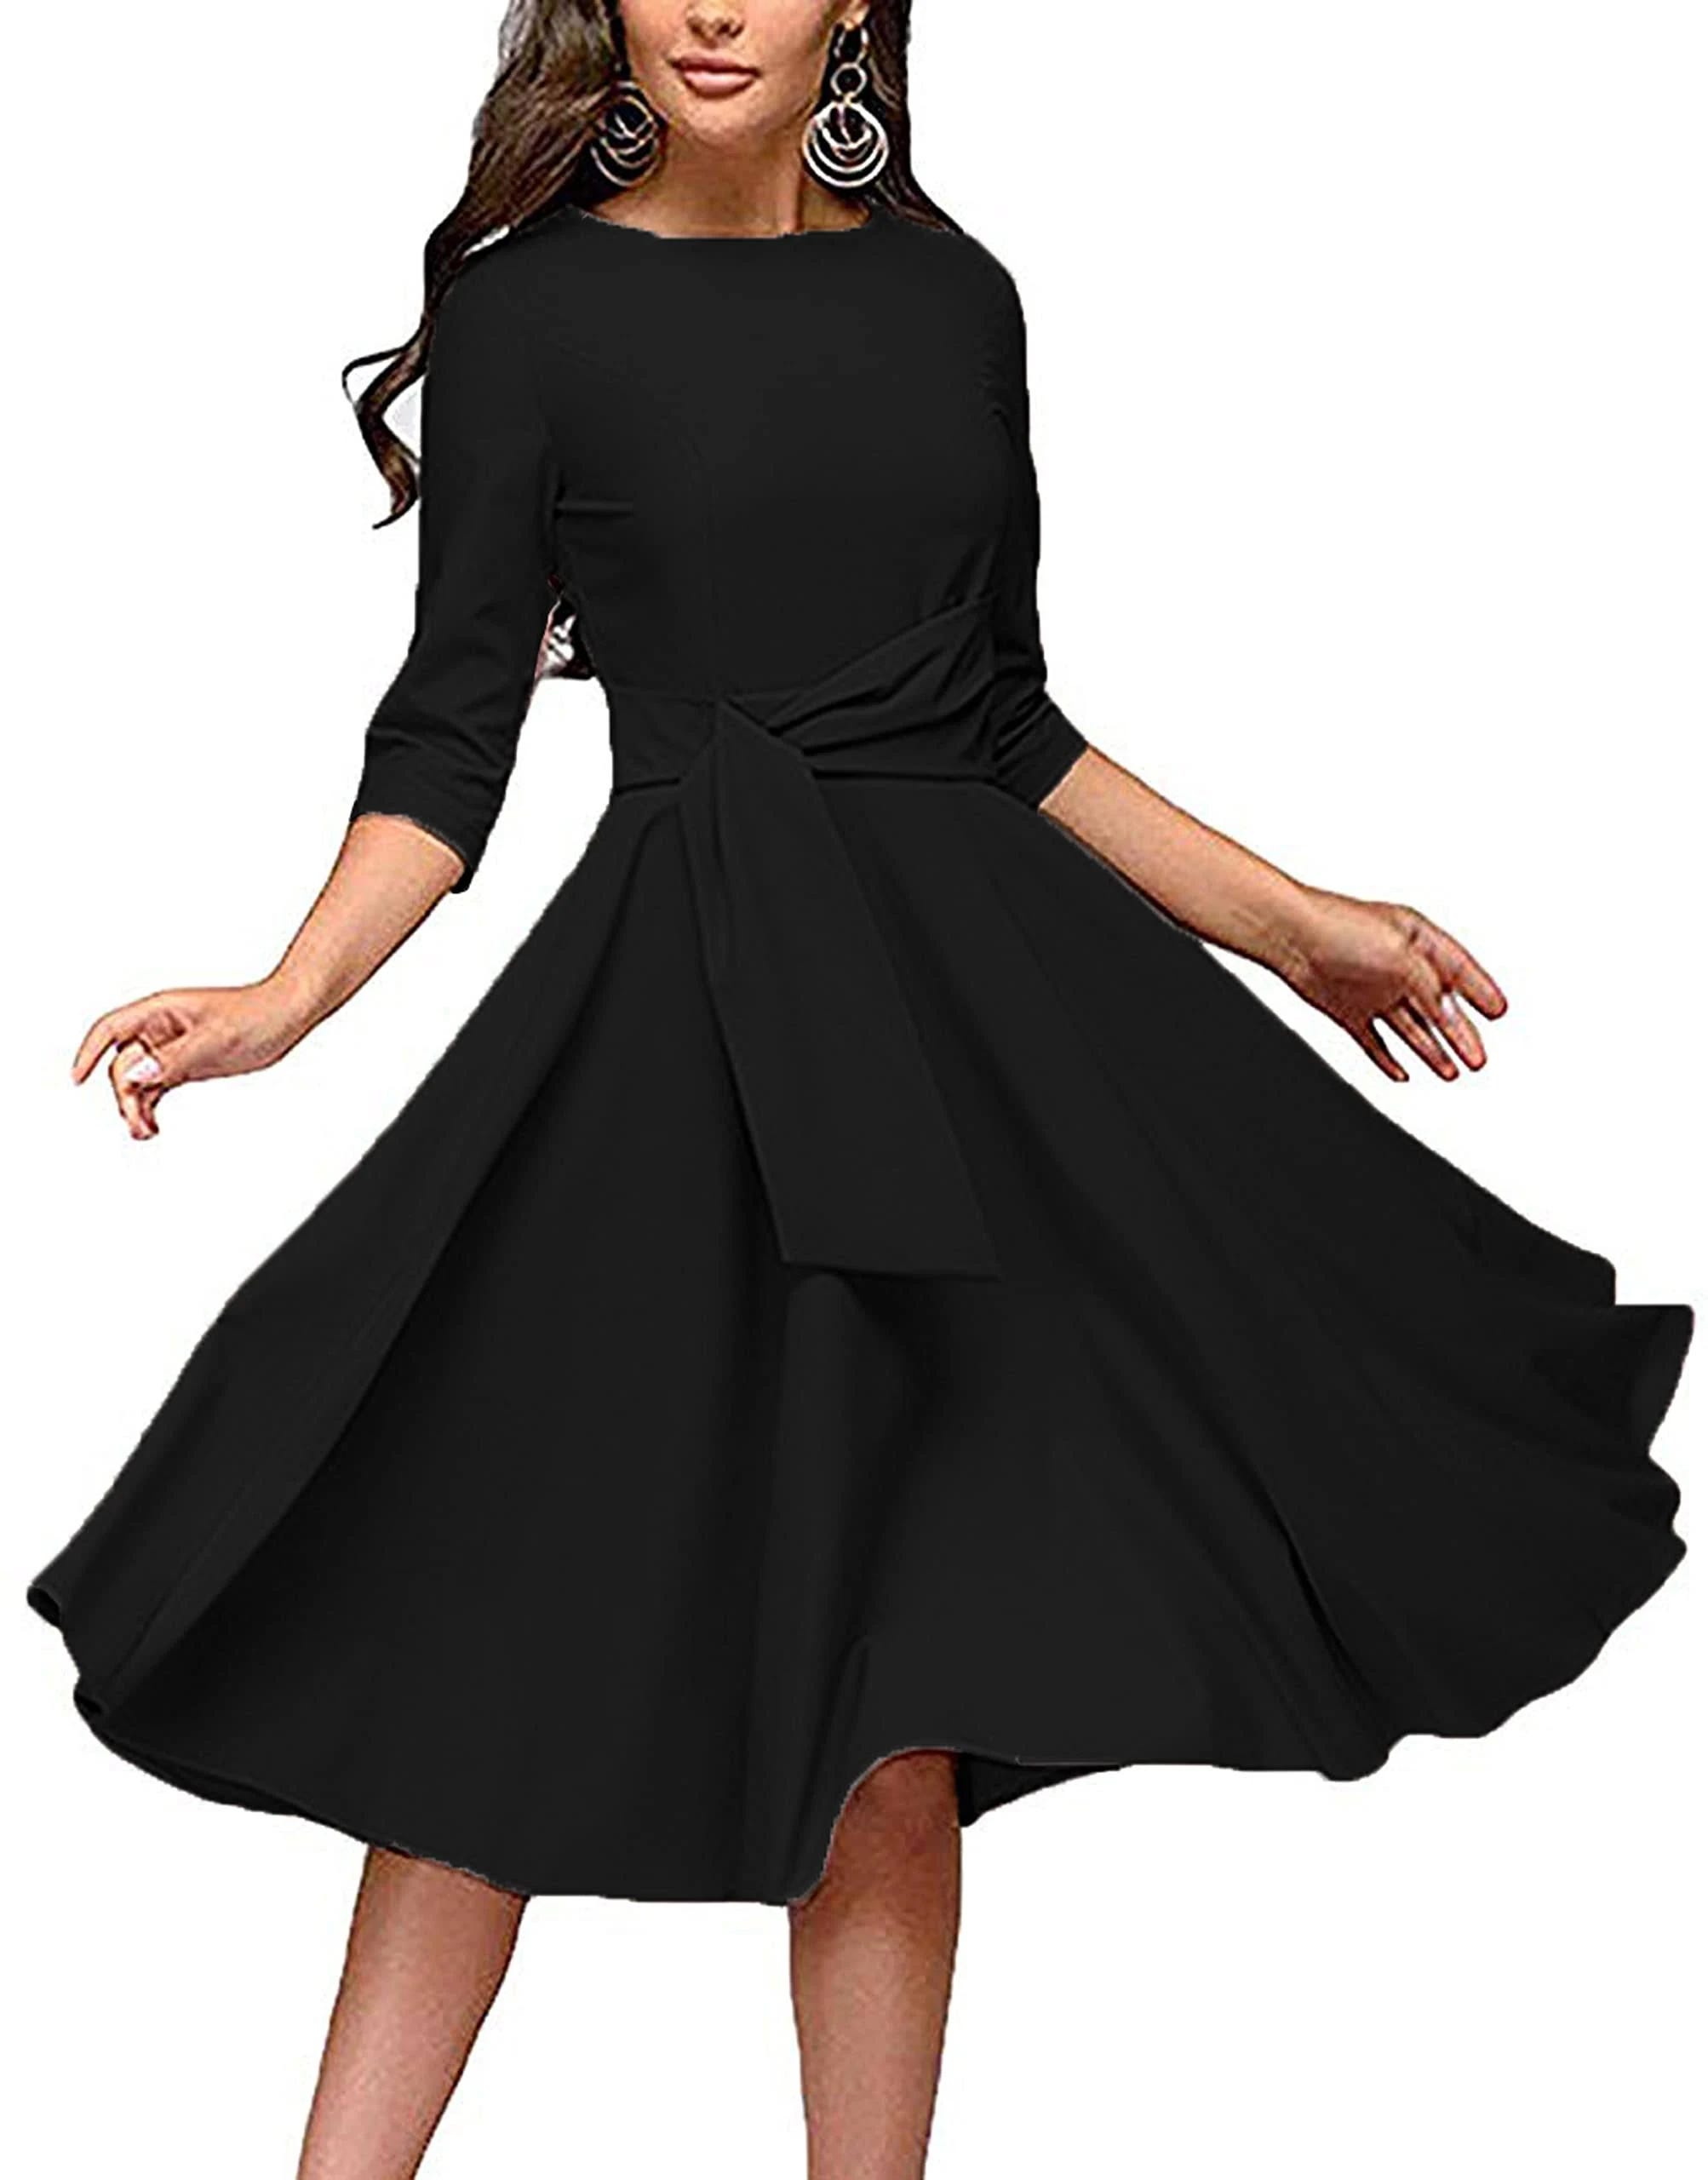 Fashionable Midi Black Dress with 3/4 Sleeves | Image